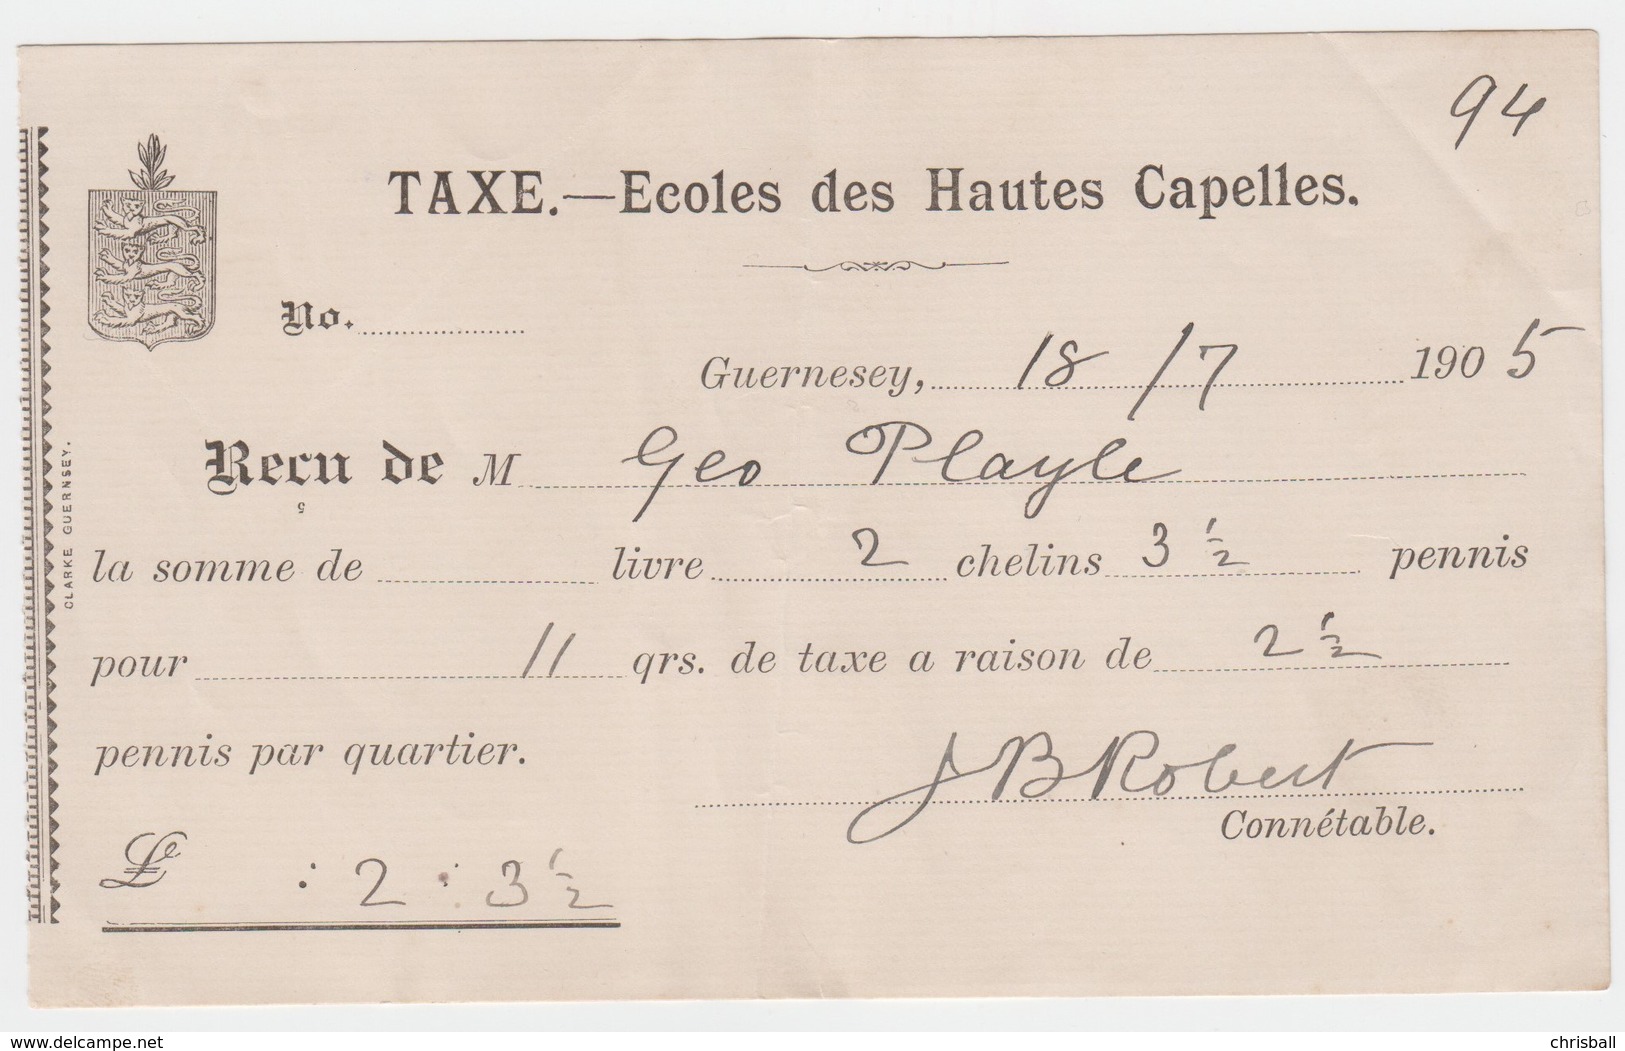 Guernsey - Ecoles Des Hautes Capelles Receipt For Payment Dated 18 July 1905 - Reino Unido